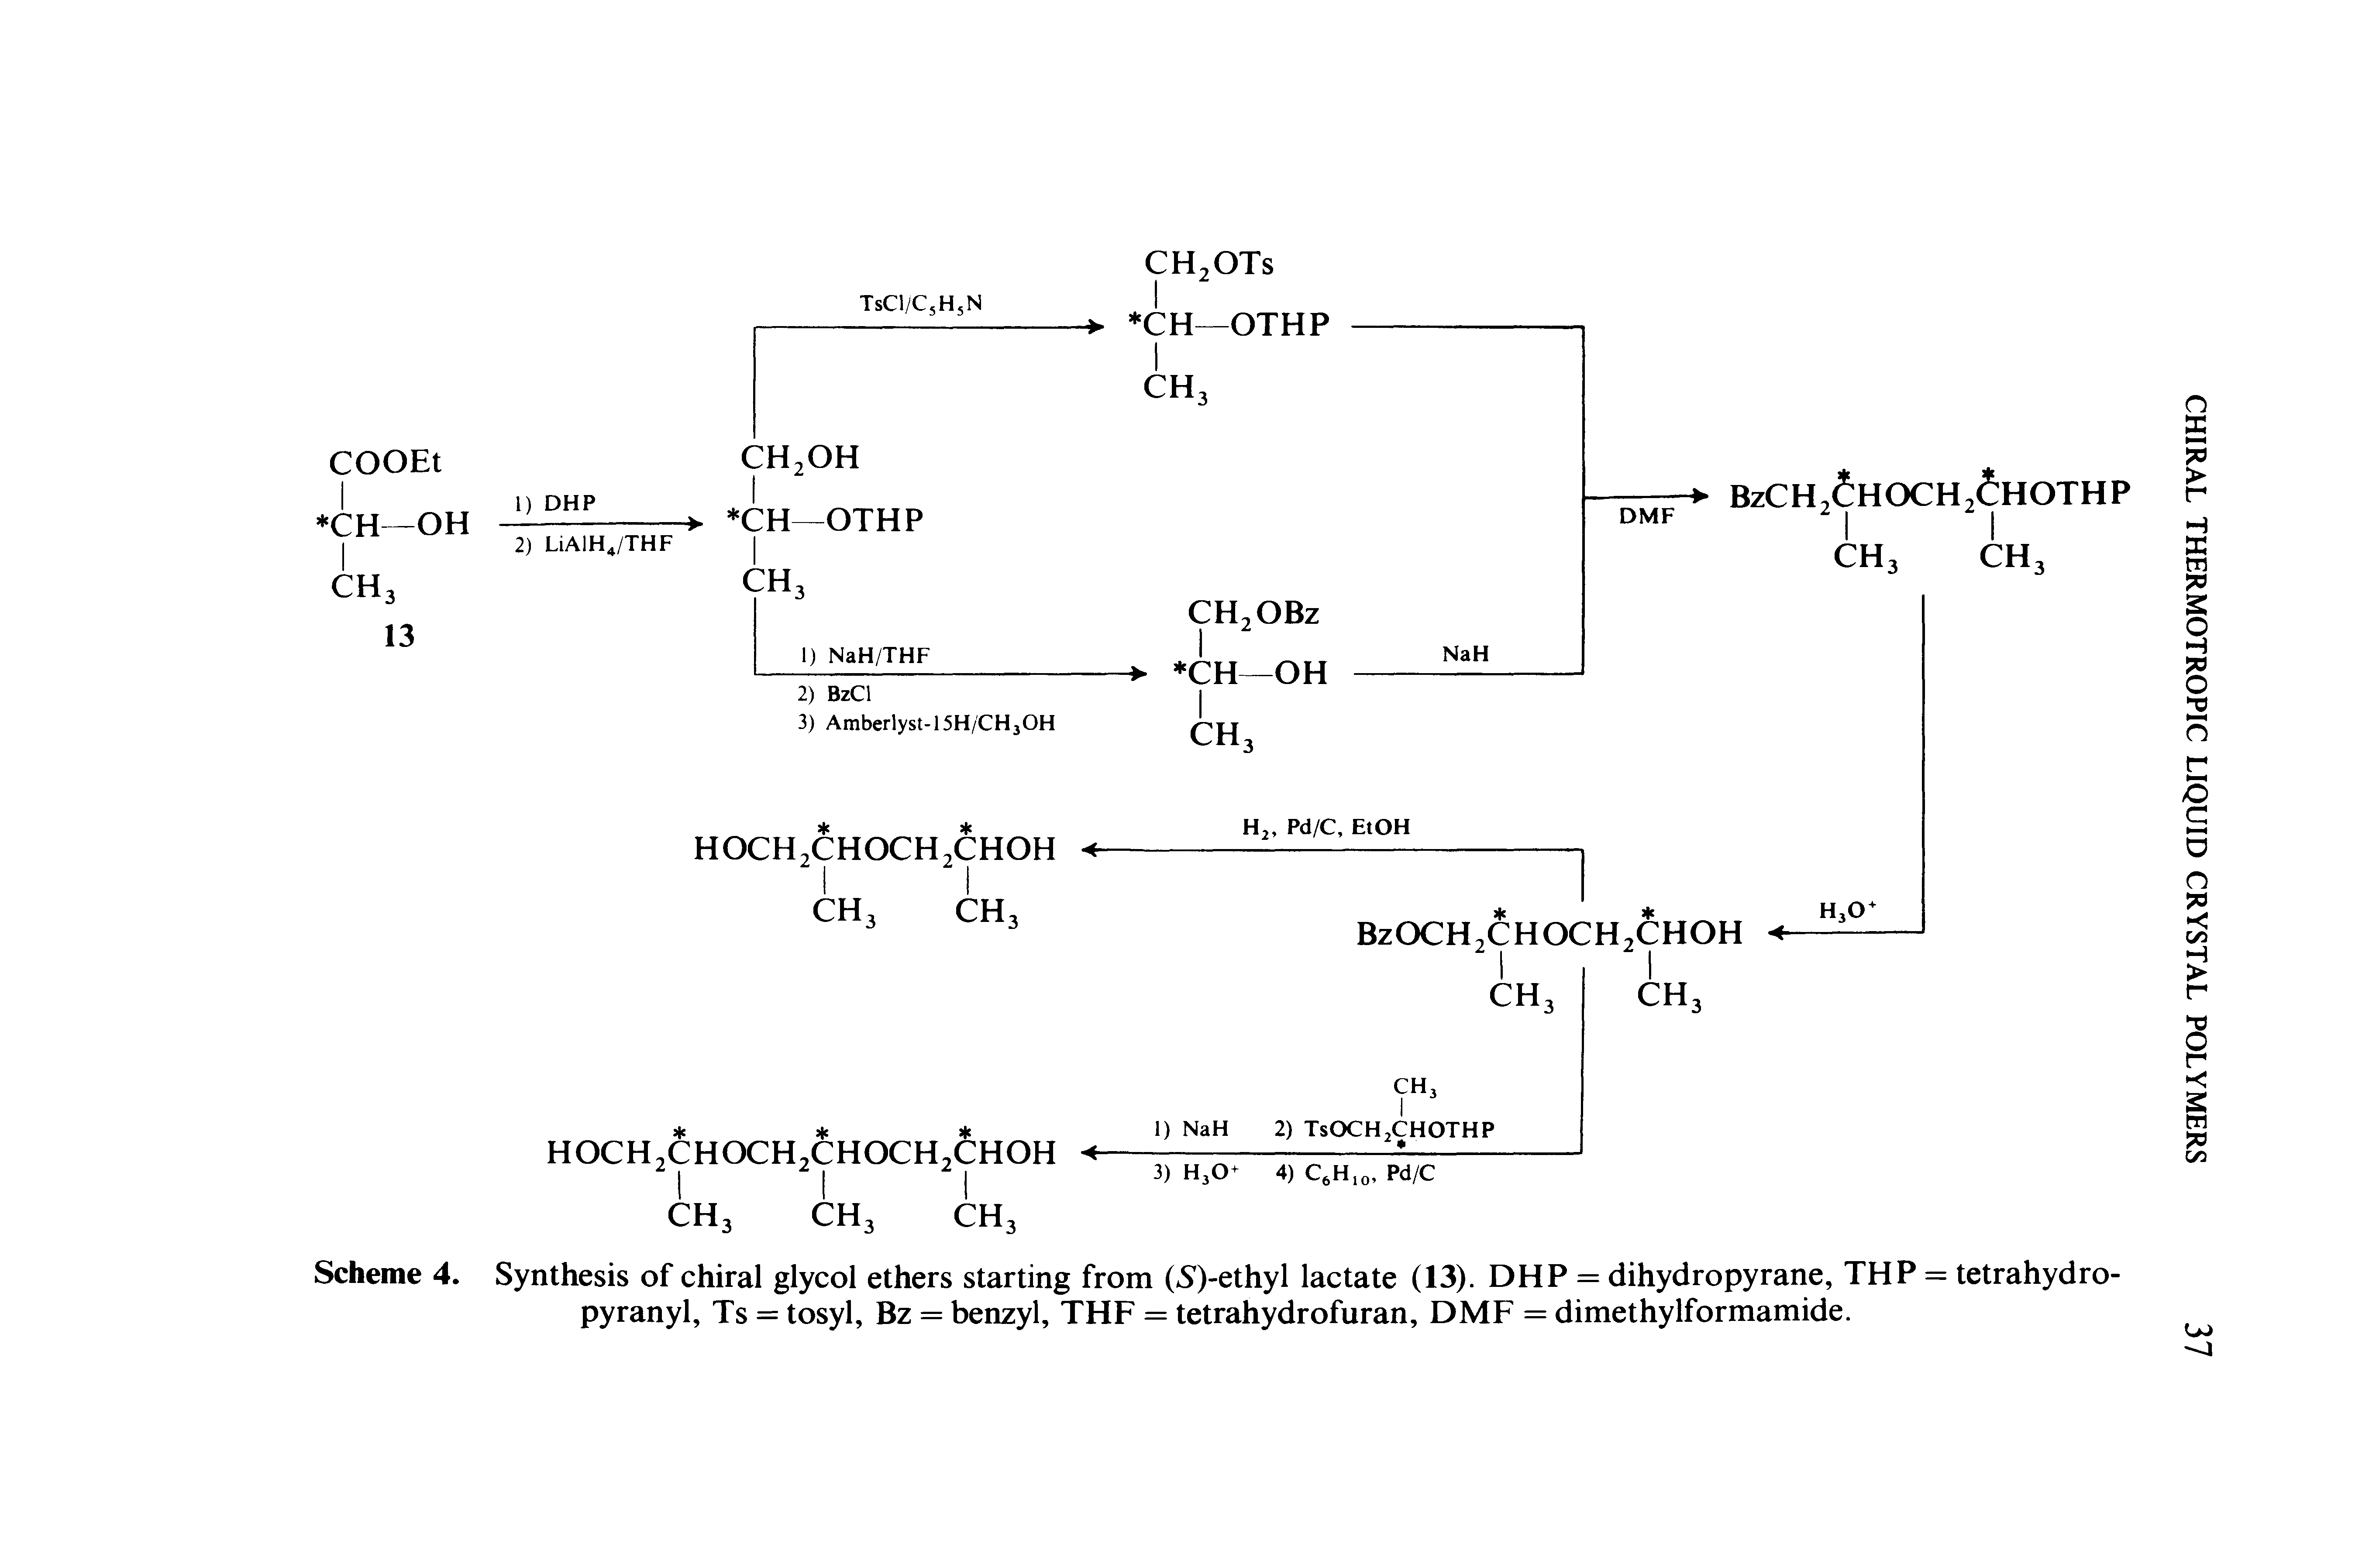 Scheme 4. Synthesis of chiral glycol ethers starting from (S)-ethyl lactate (13). DHP = dihydropyrane, THP = tetrahydro-pyranyl, Ts = tosyl, Bz = benzyl, THE = tetrahydrofuran, DMF = dimethylformamide.